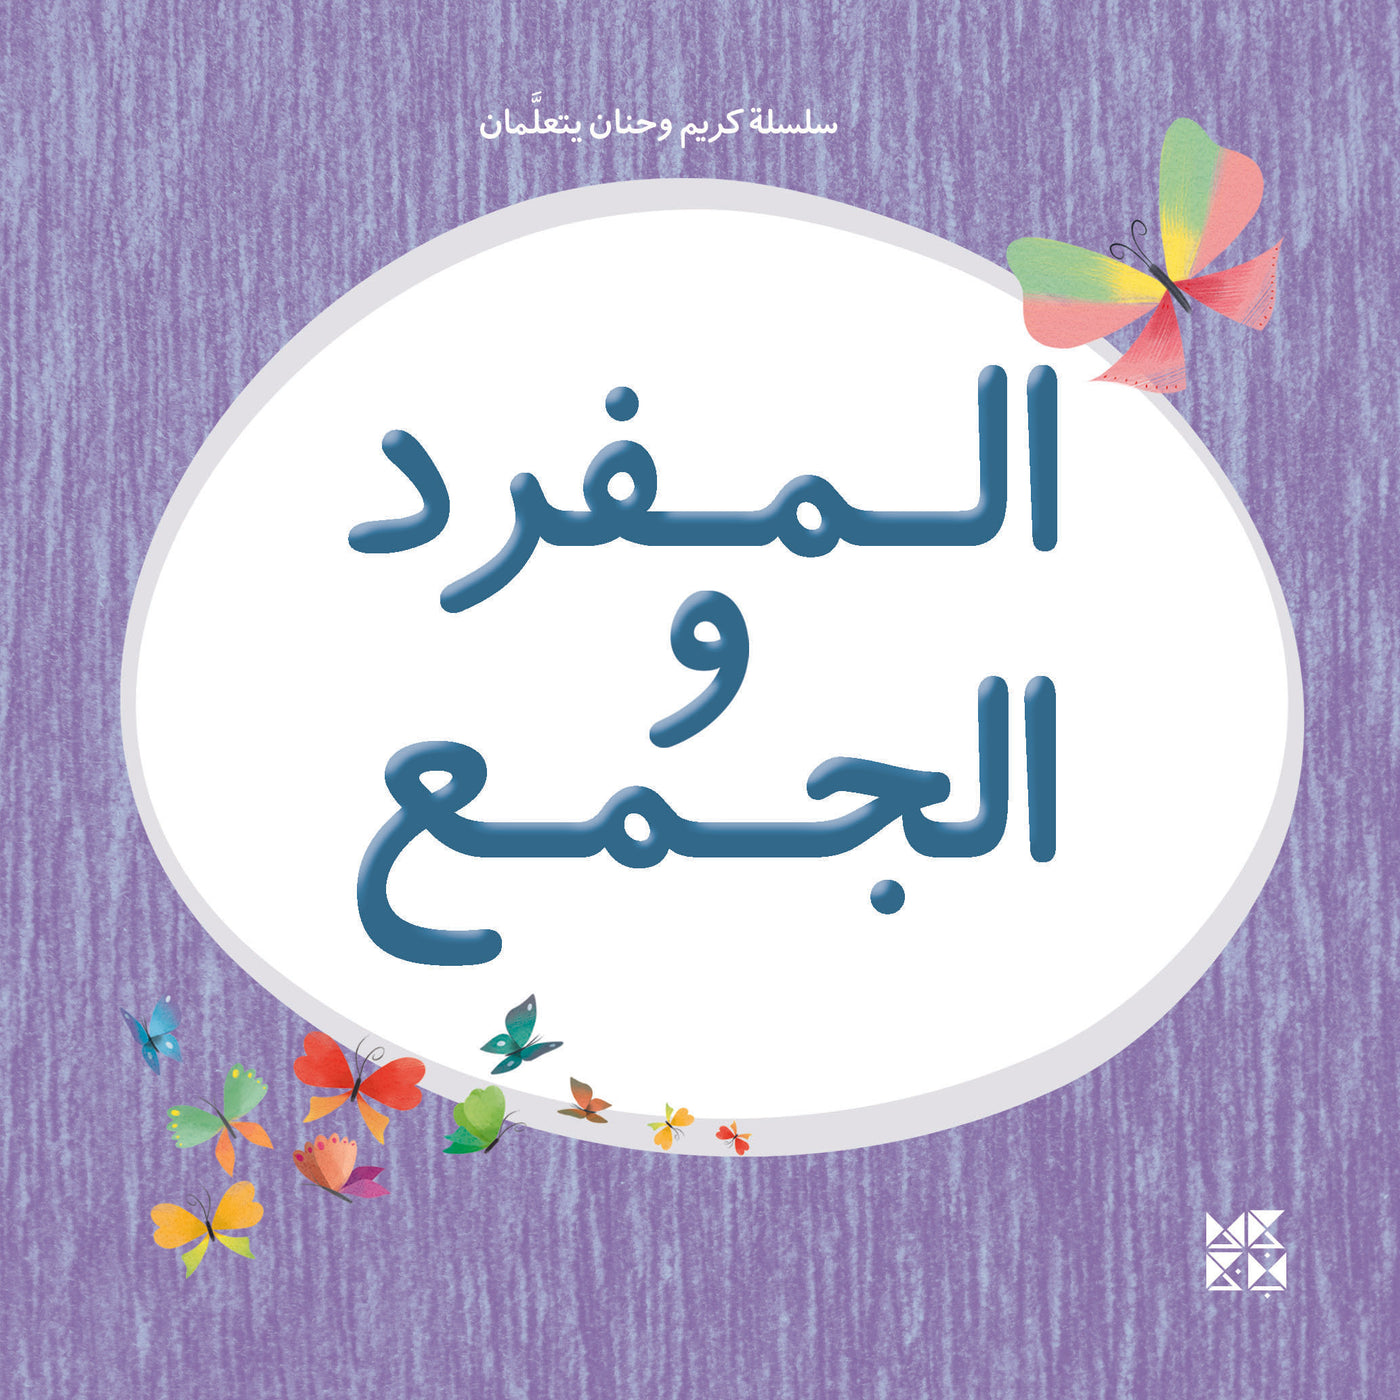 Karim and Hanan Are Learning: Singular/Plural Book Cover